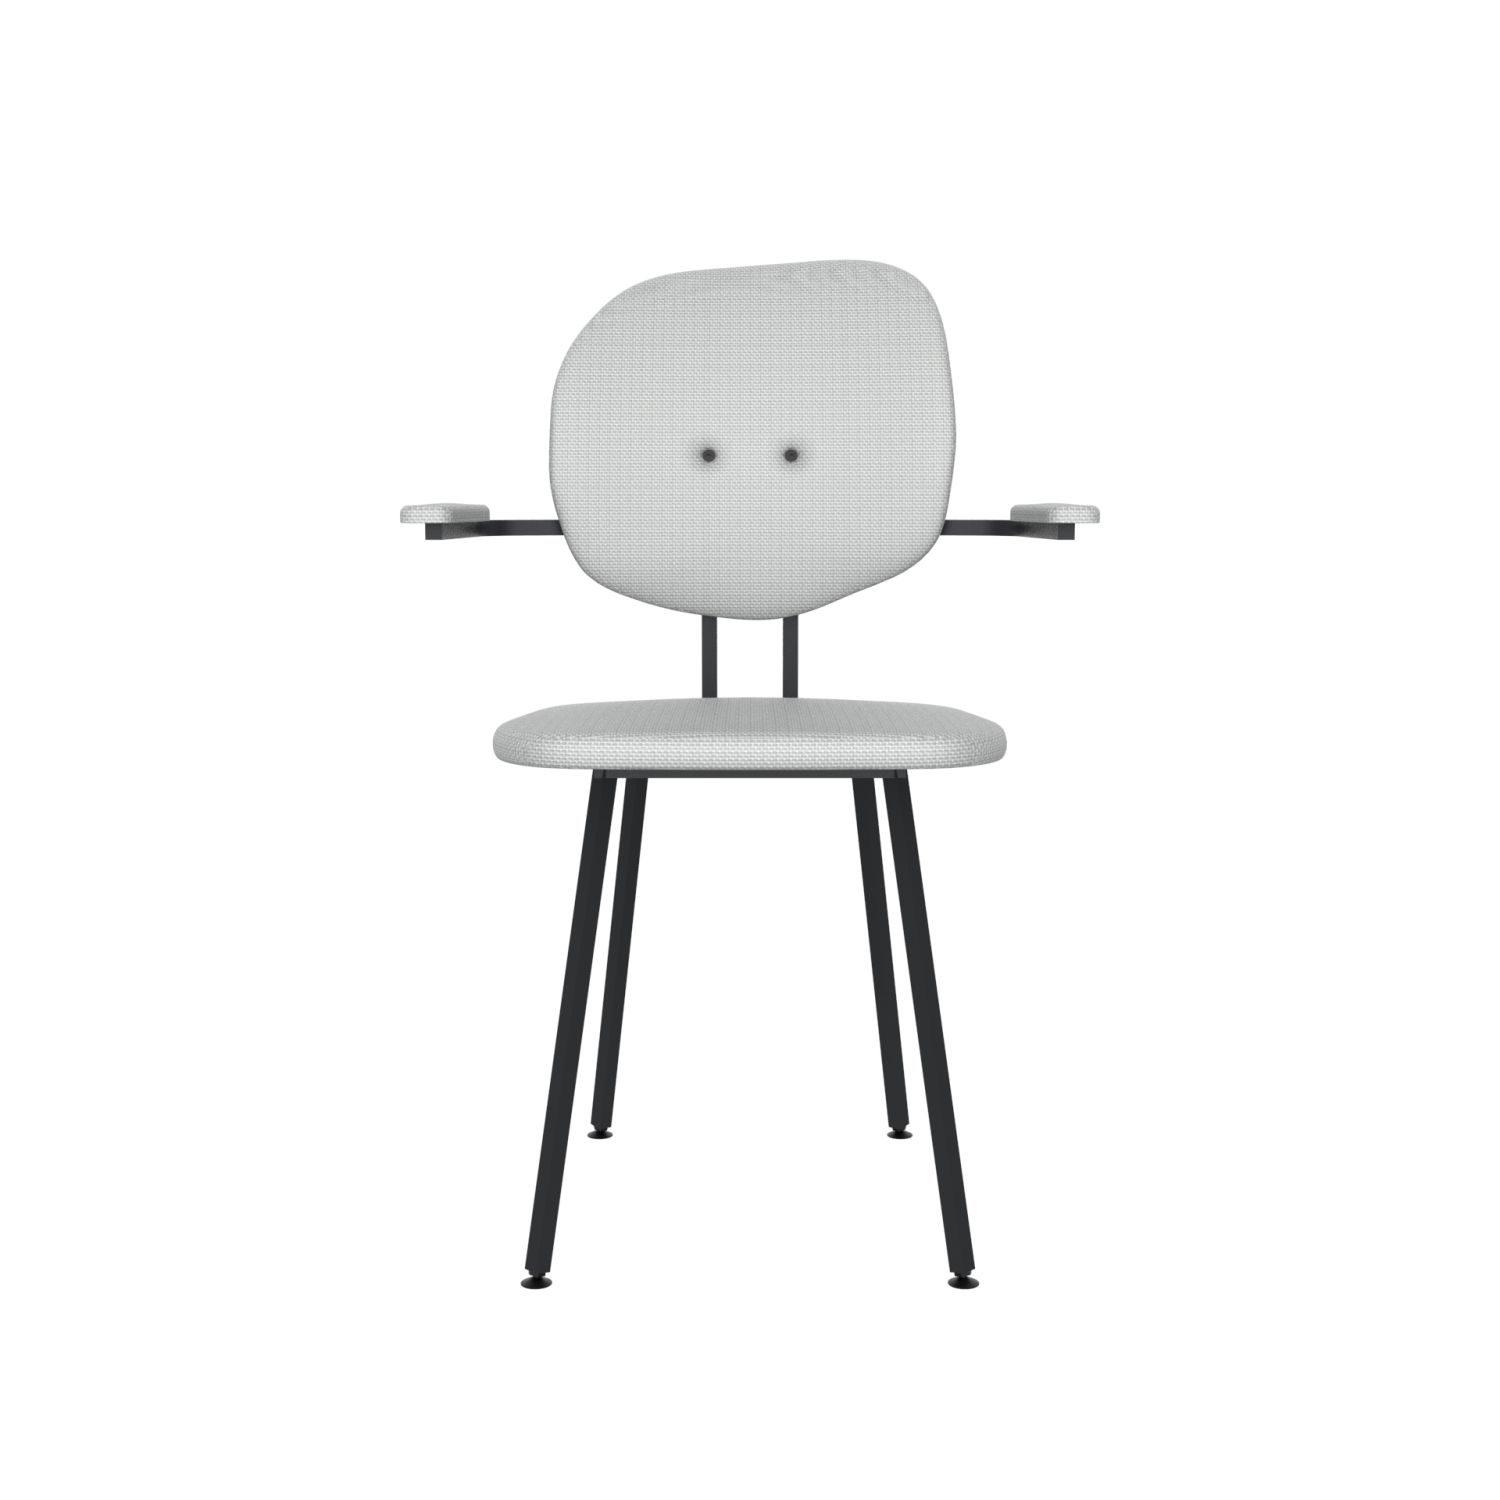 lensvelt maarten baas chair 102 not stackable with armrests backrest h breeze light grey 171 black ral9005 hard leg ends